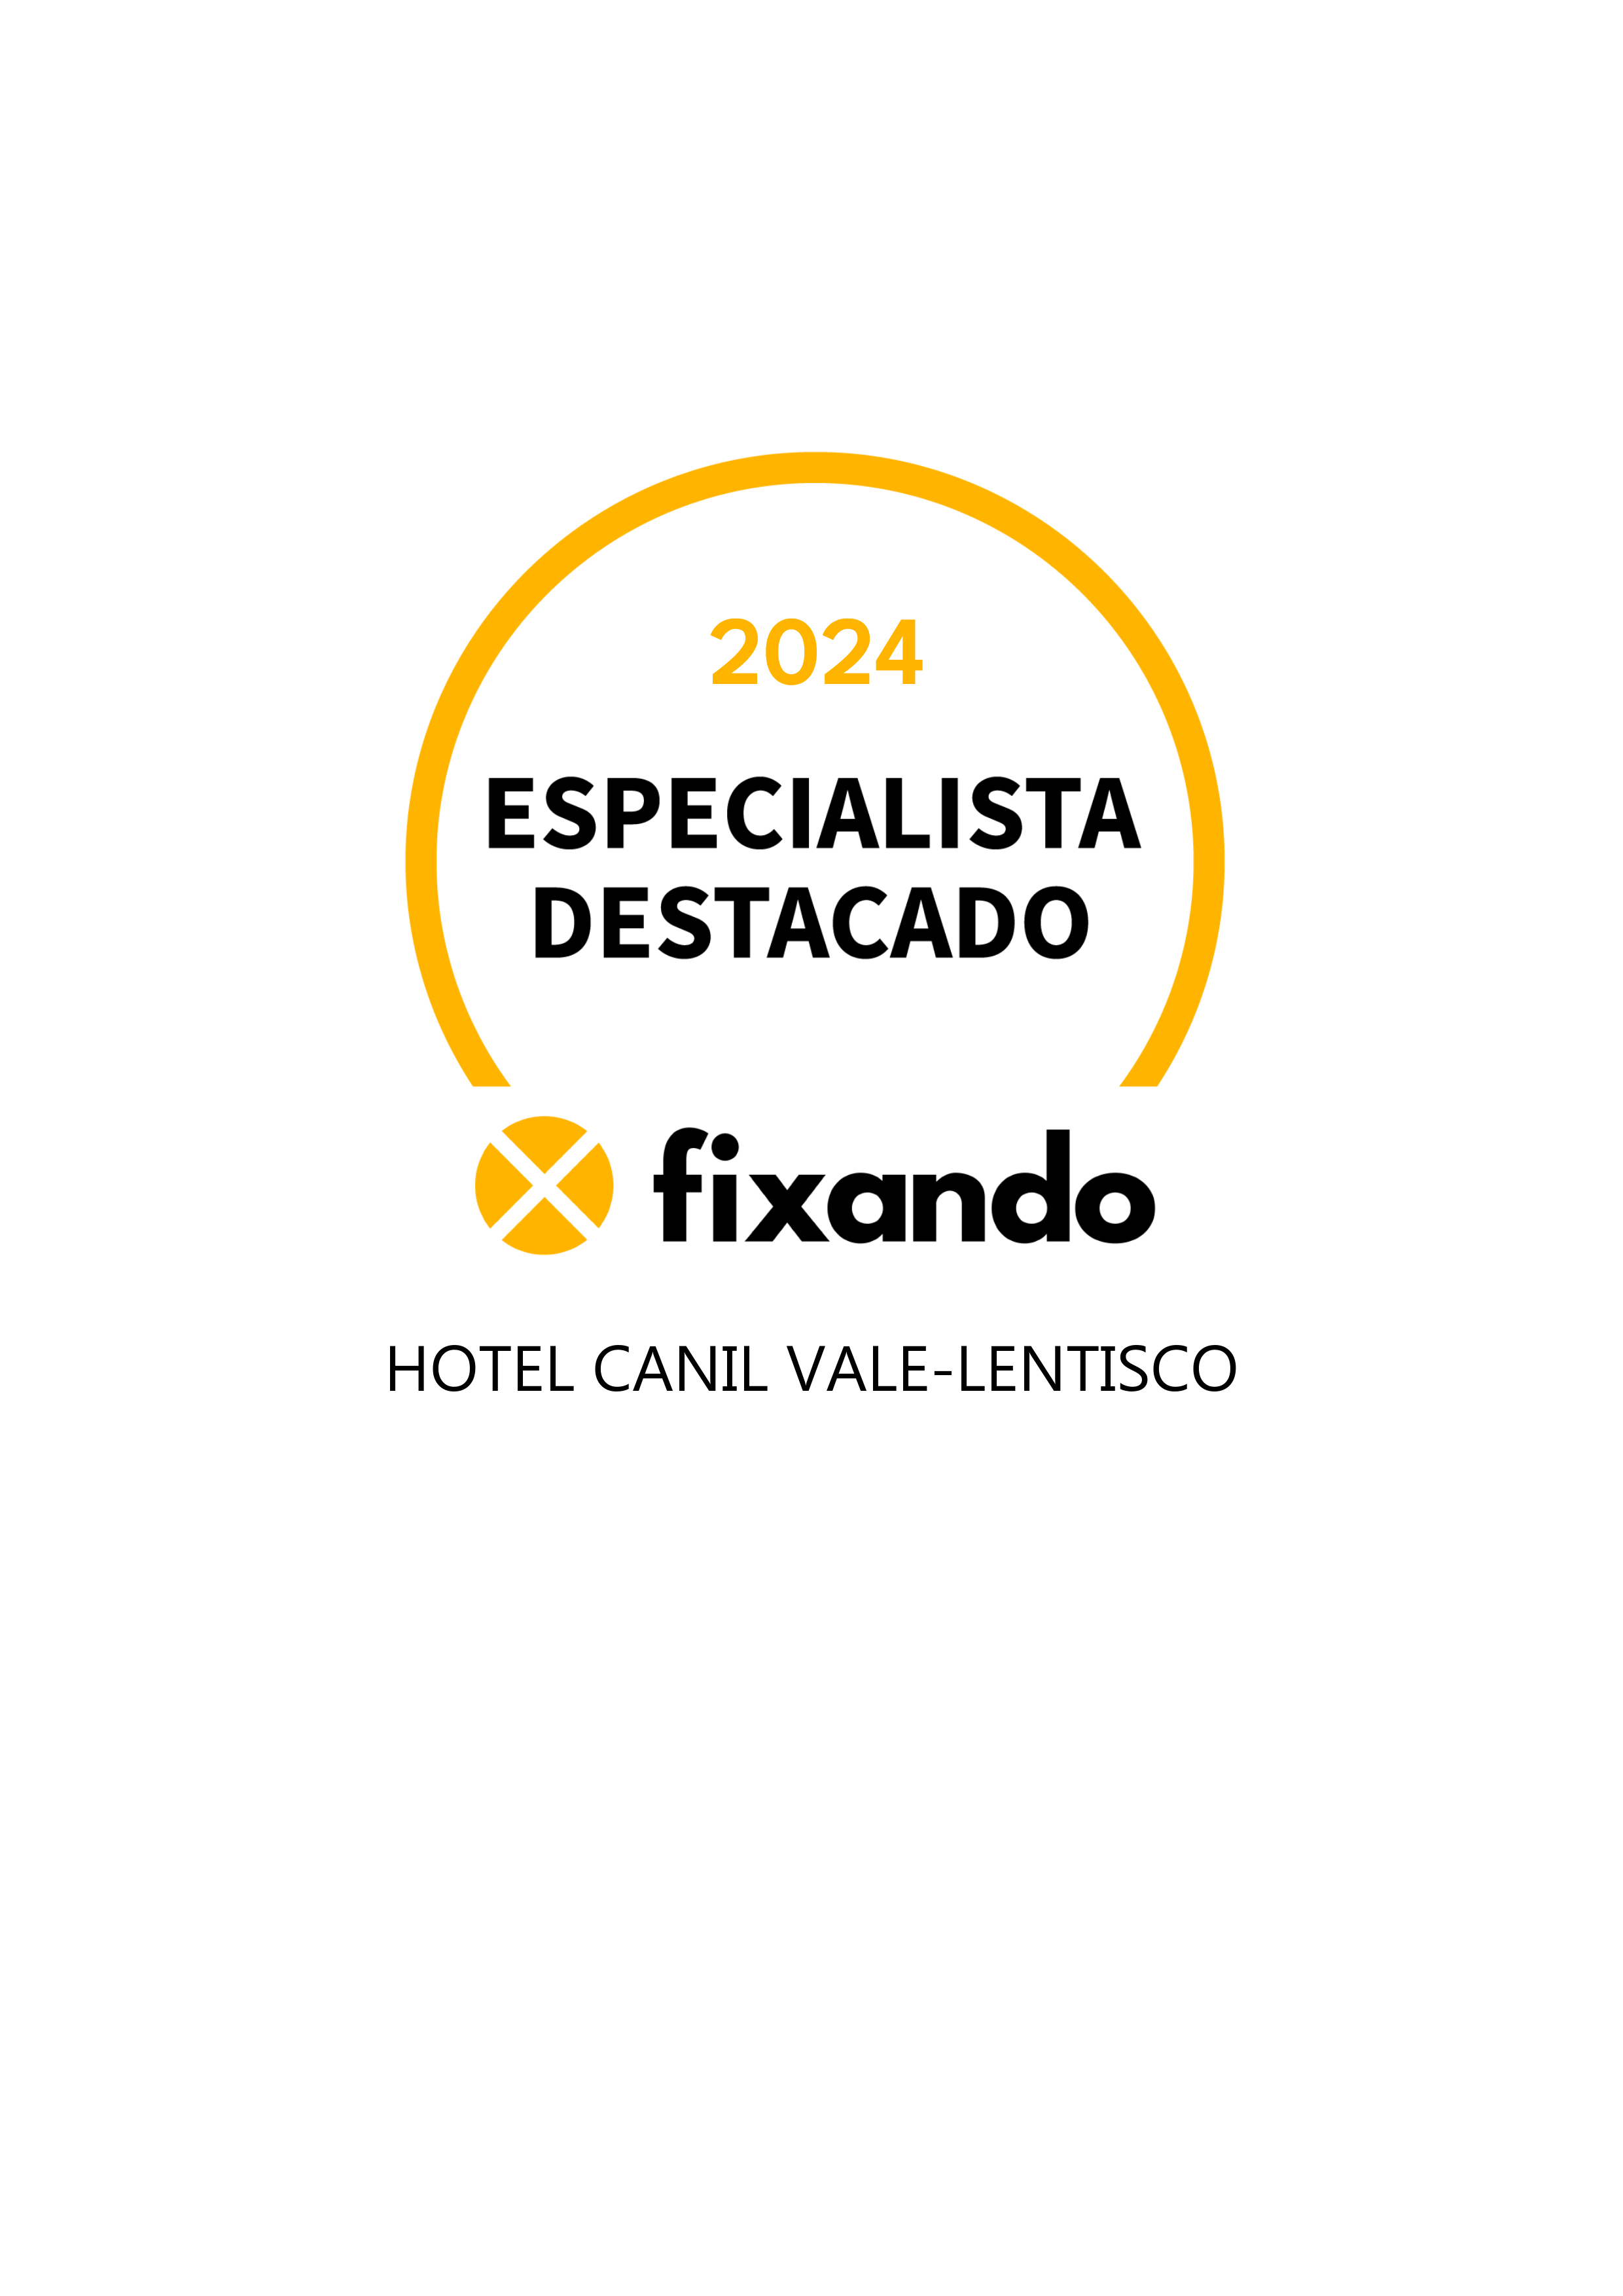 Hotel canil vale-lentisco - Mirandela - Dog Walking